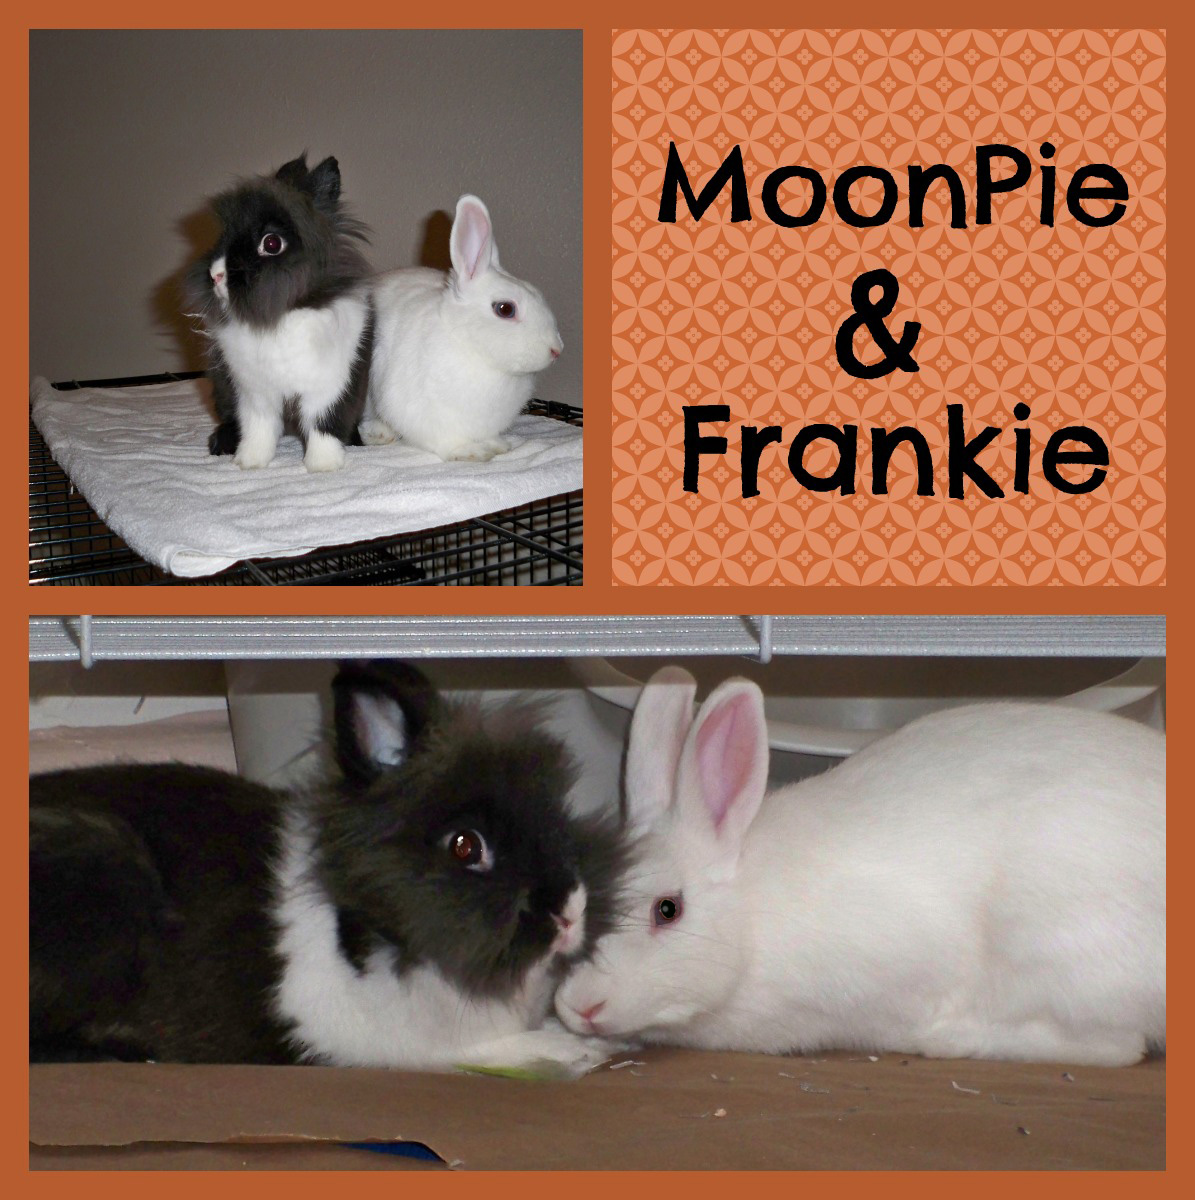 Moonpie & Frankie